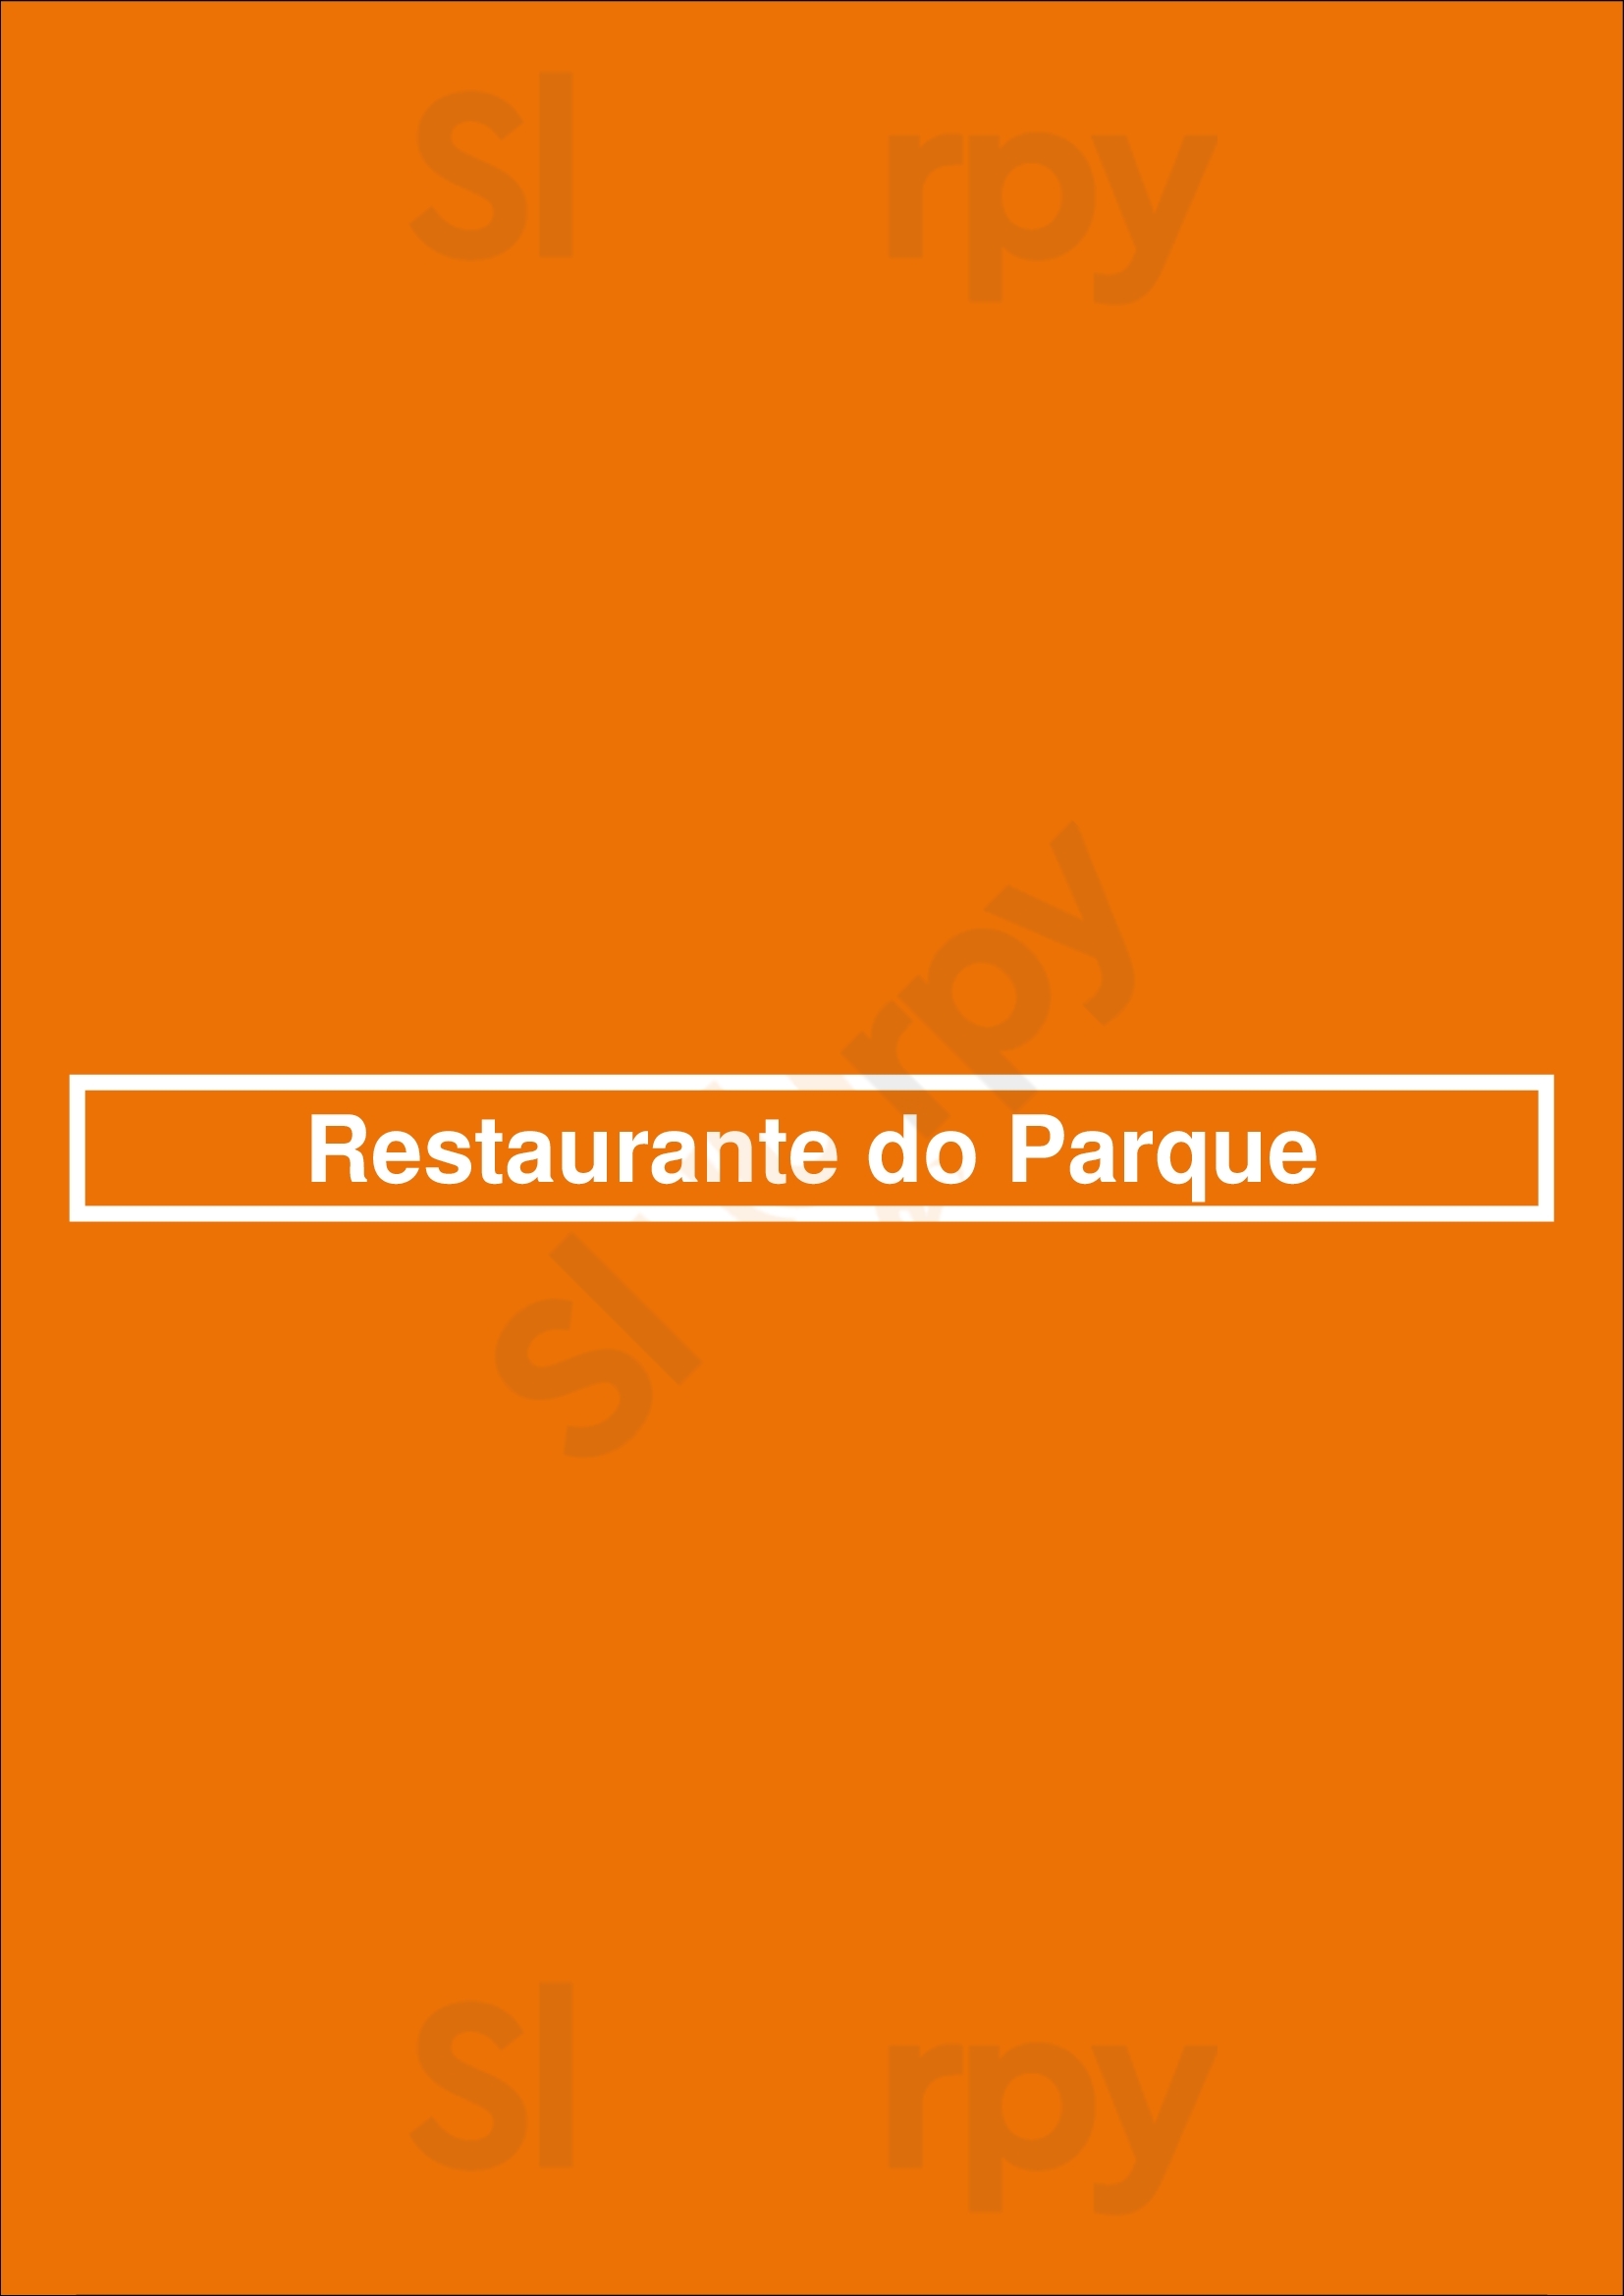 Restaurante Do Parque Peniche Menu - 1